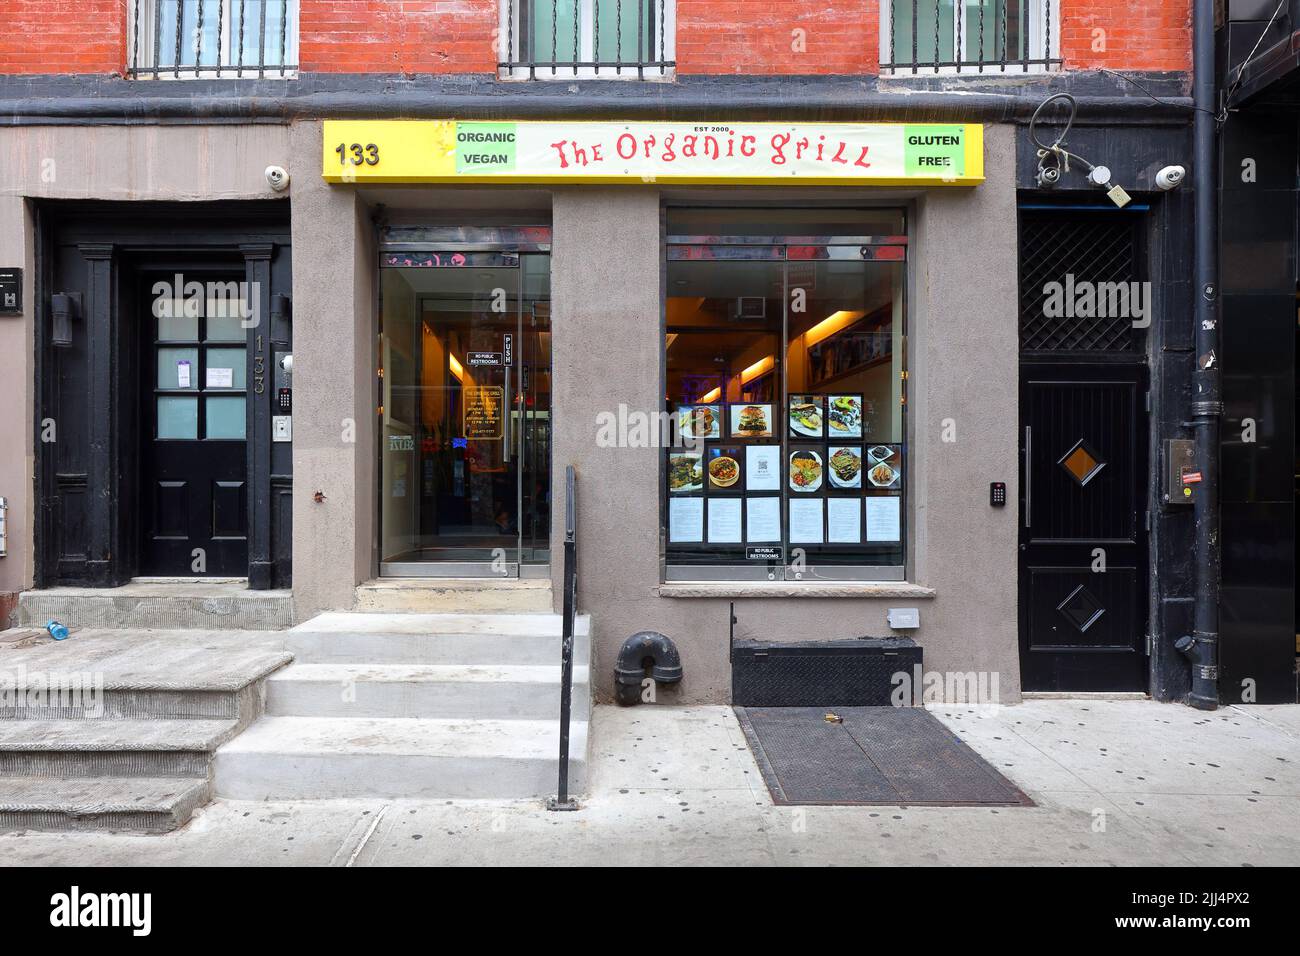 The Organic Grill, 133 W 3rd St, New York, NY. Façade extérieure d'un restaurant végétalien, biologique, sans gluten dans Greenwich Village de Manhattan Banque D'Images